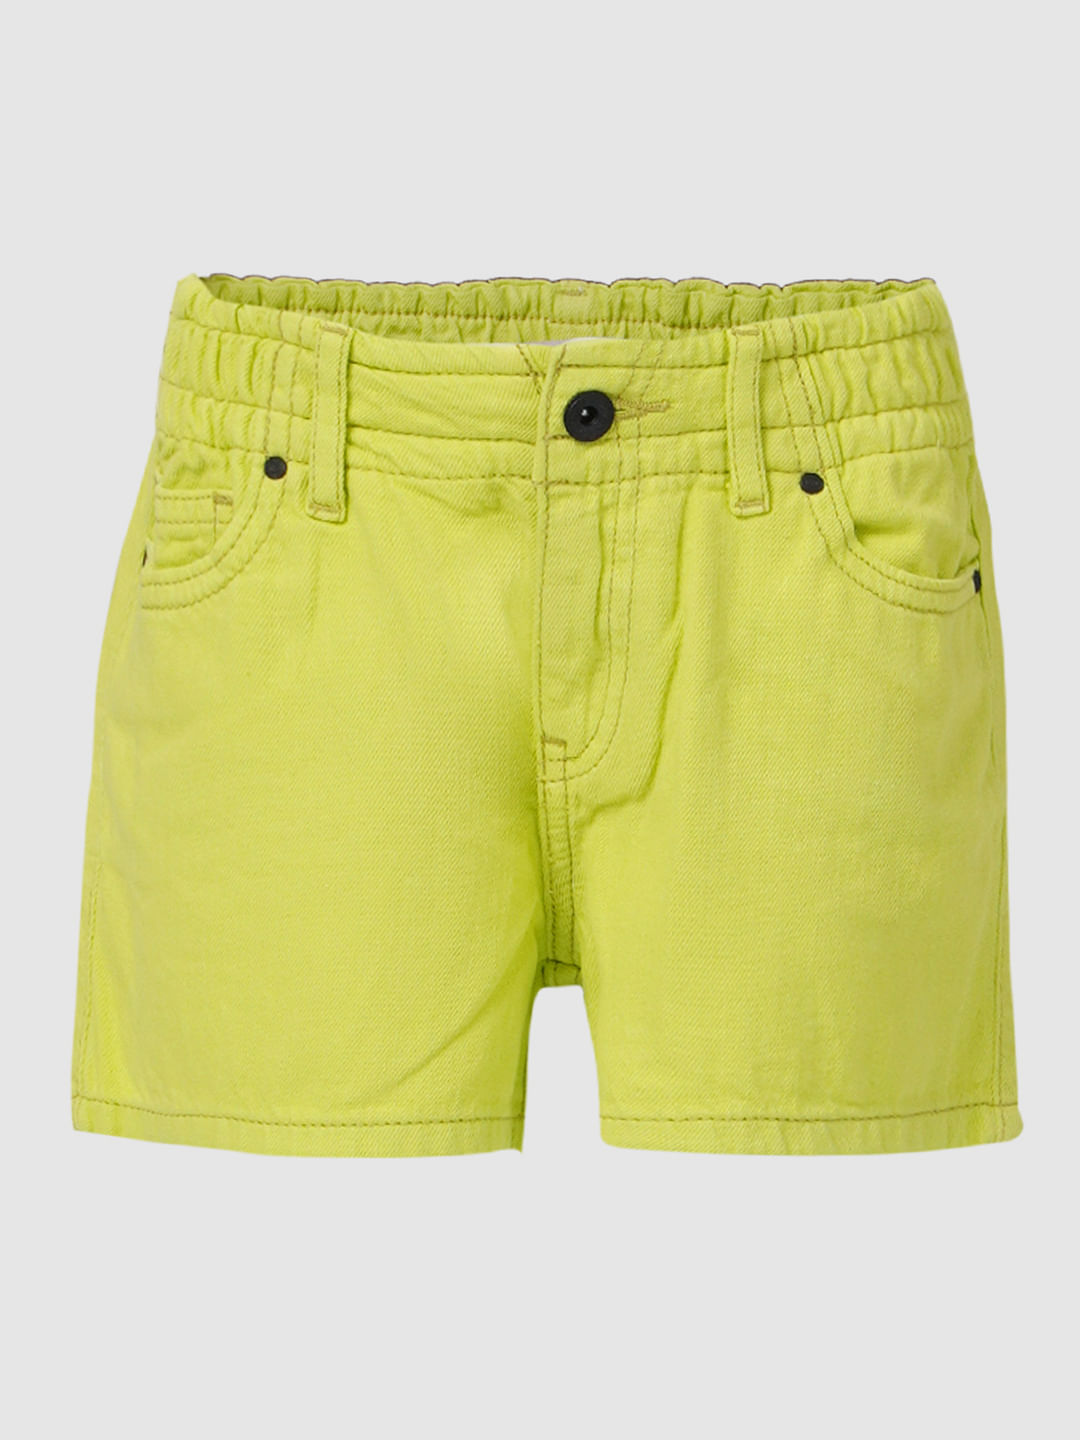 Best denim shorts for summer: Everlane Cheeky shorts reviews